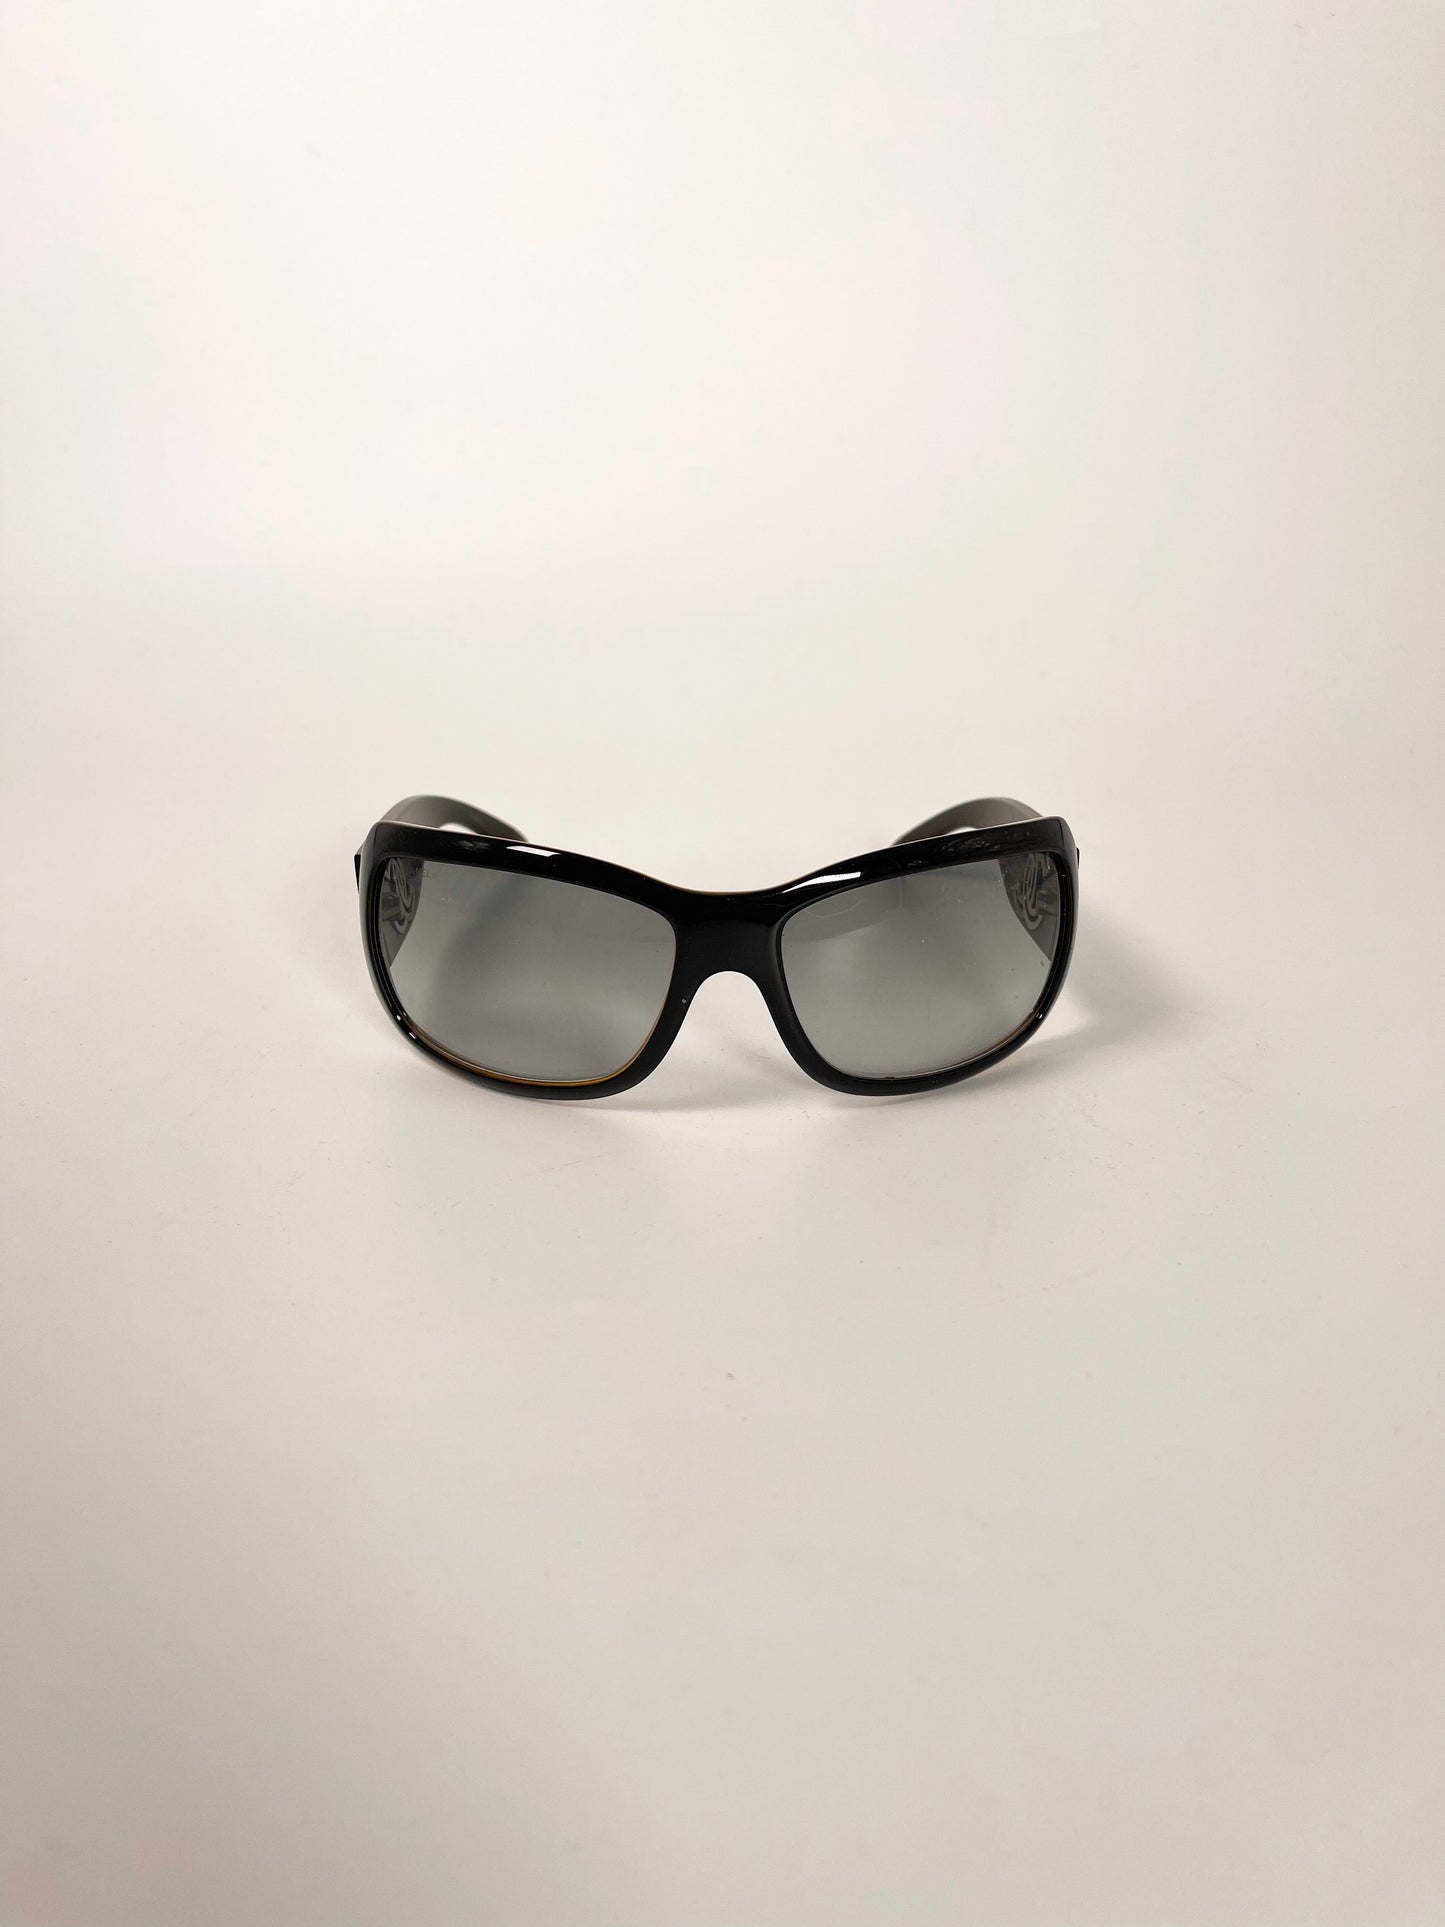 Chanel Interlocking CC Logo Square Sunglasses